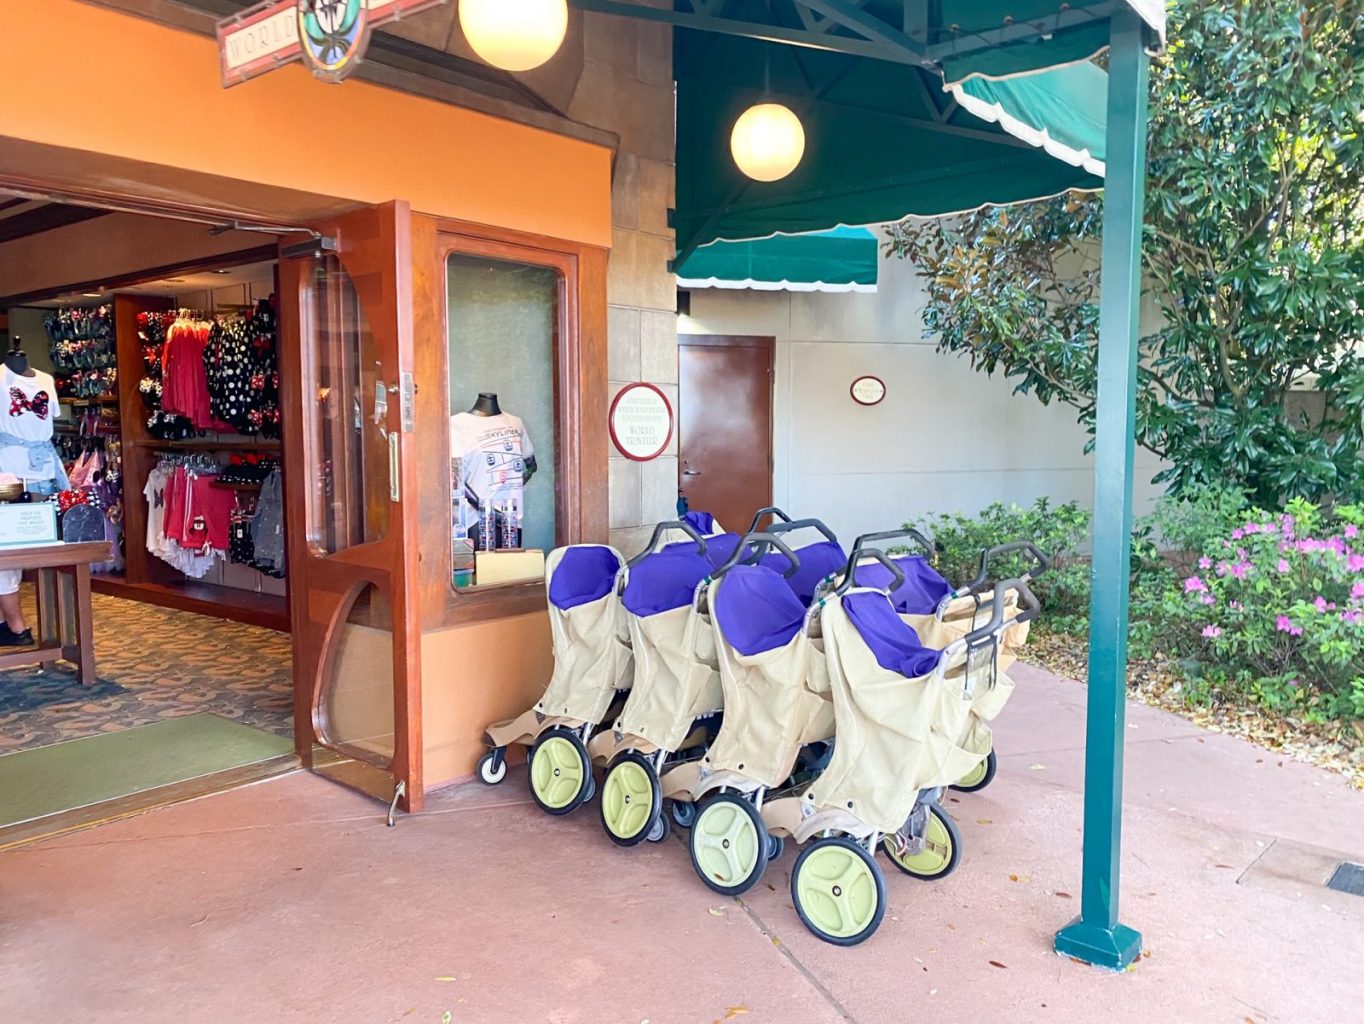 Stroller rental strollers at the Epcot International Gateway